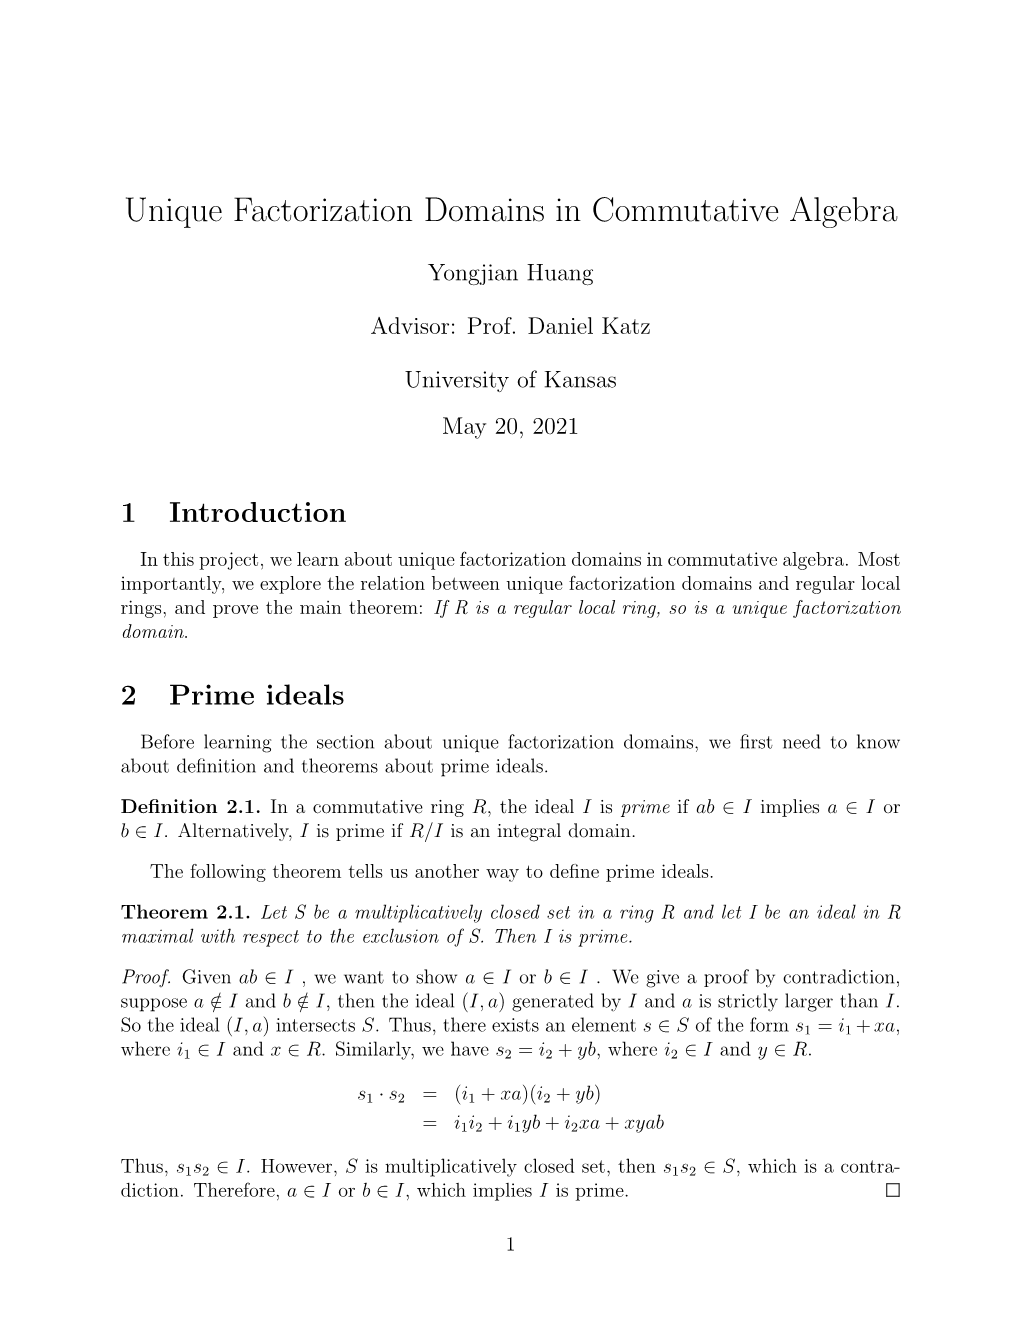 Unique Factorization Domains in Commutative Algebra.Pdf (366.6Kb)